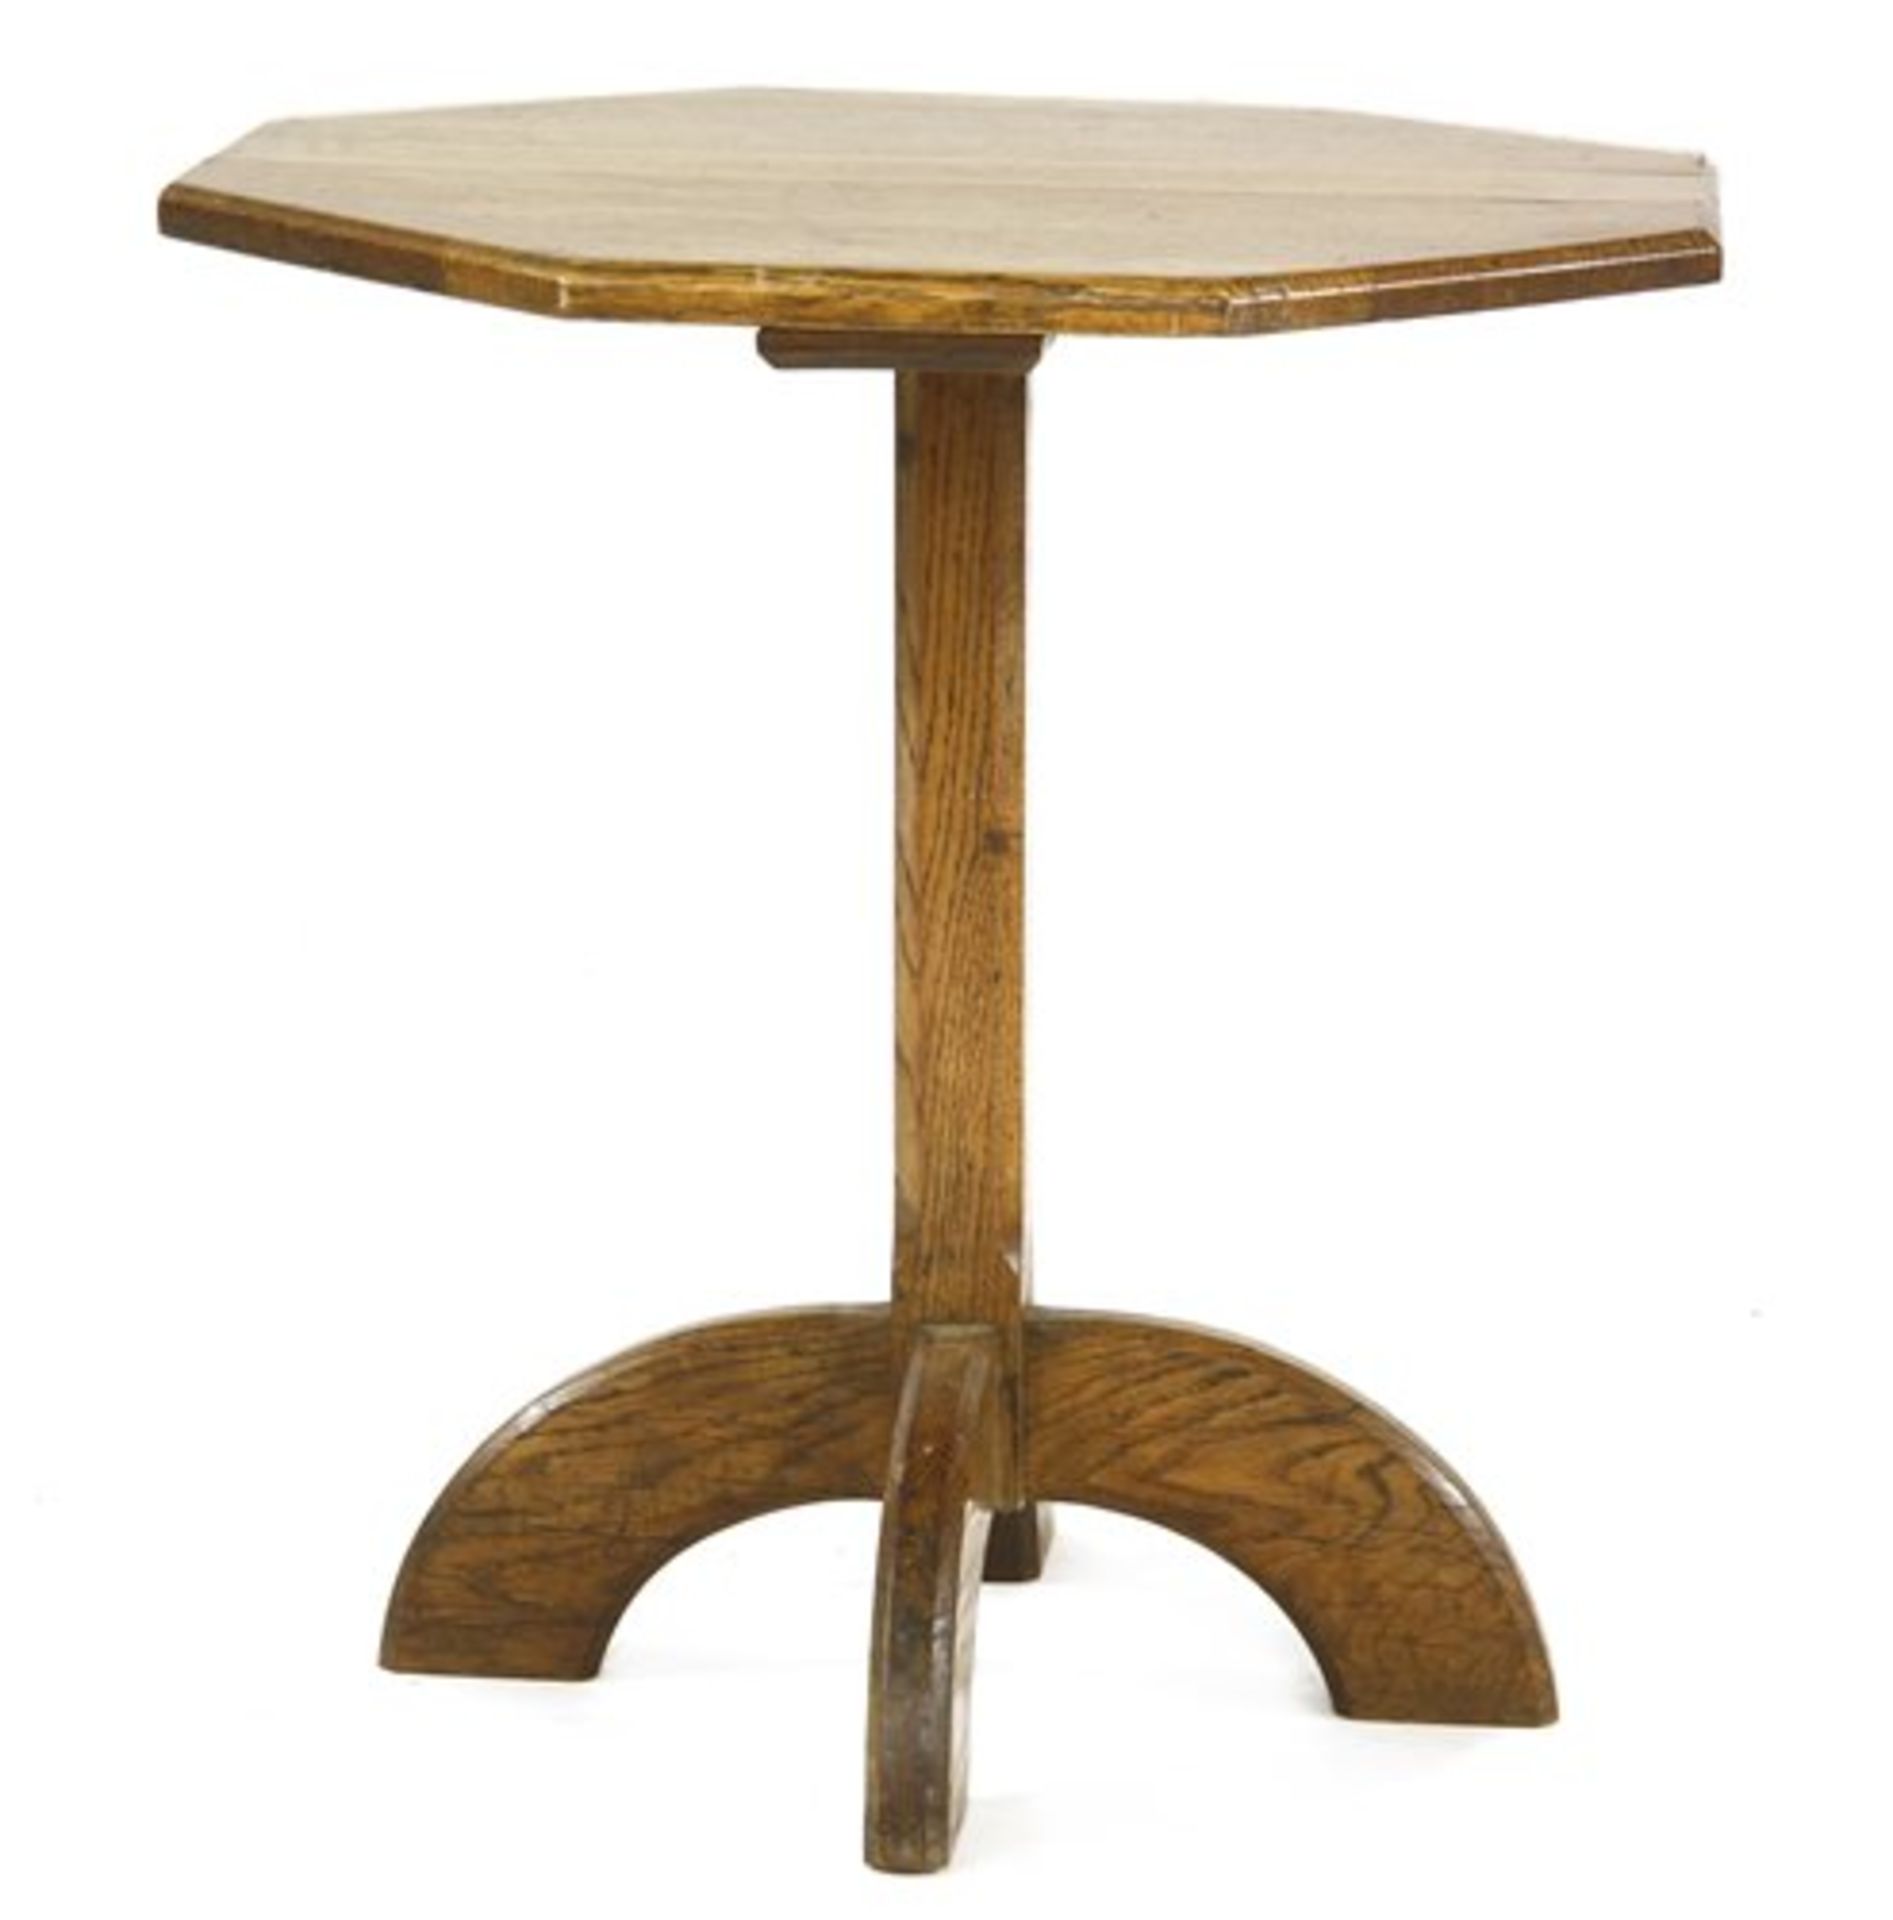 An octagonal oak lamp table,